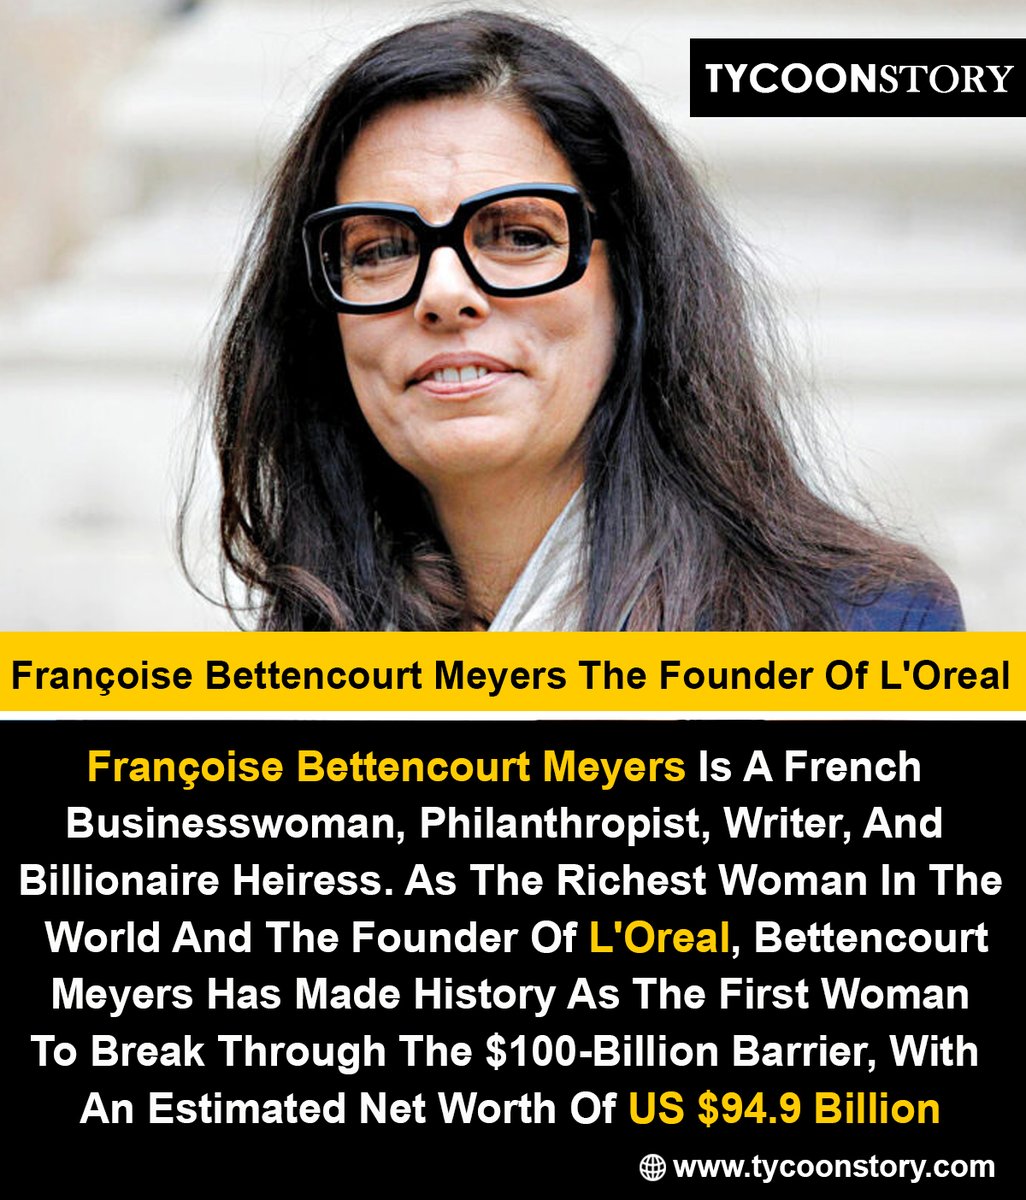 Françoise Bettencourt Meyers The Founder Of L'Oreal
#FrançoiseBettencourtMeyers #LorealChairwoman #BettencourtFamily #LorealHeiress #WomenInBusiness #BillionaireWomen #LegacyOfBeauty #InspiringLeaders #Philanthropy #BeautyEmpire 
tycoonstory.com